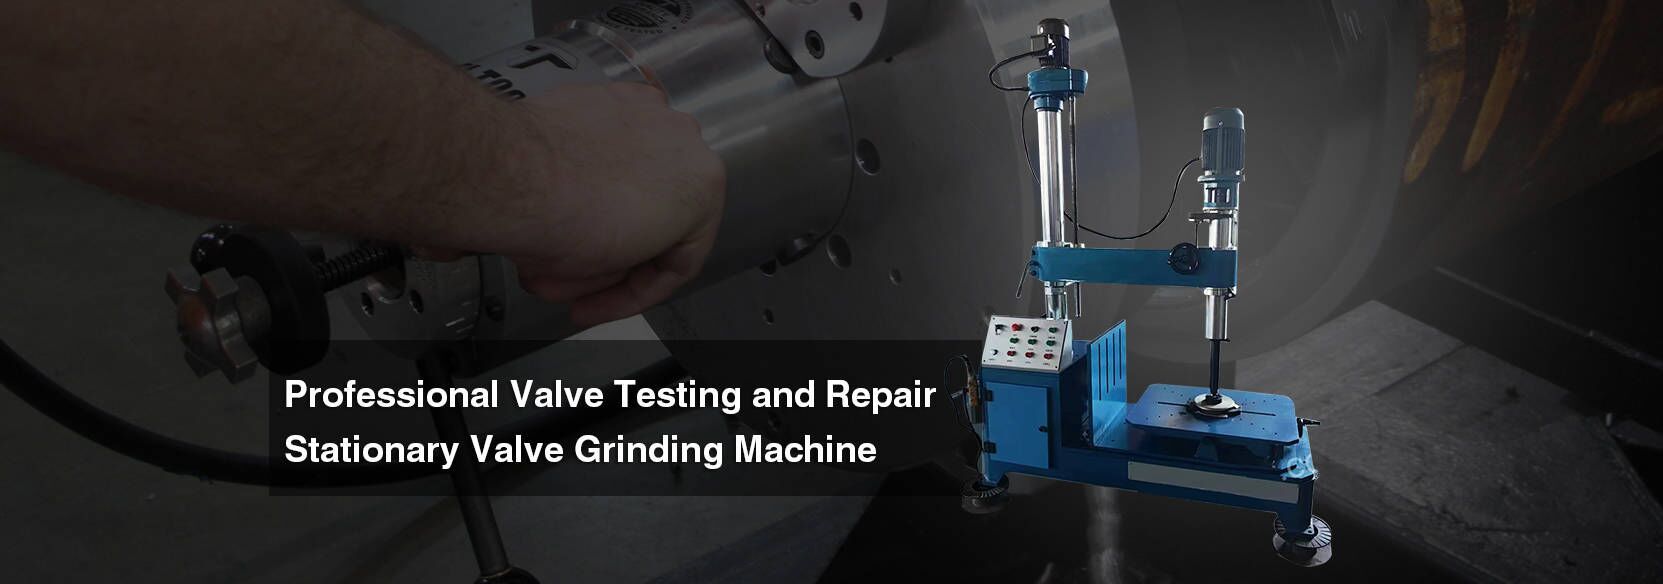 Professional Valve Testing and Repair Stationary Valve Grinding Machine